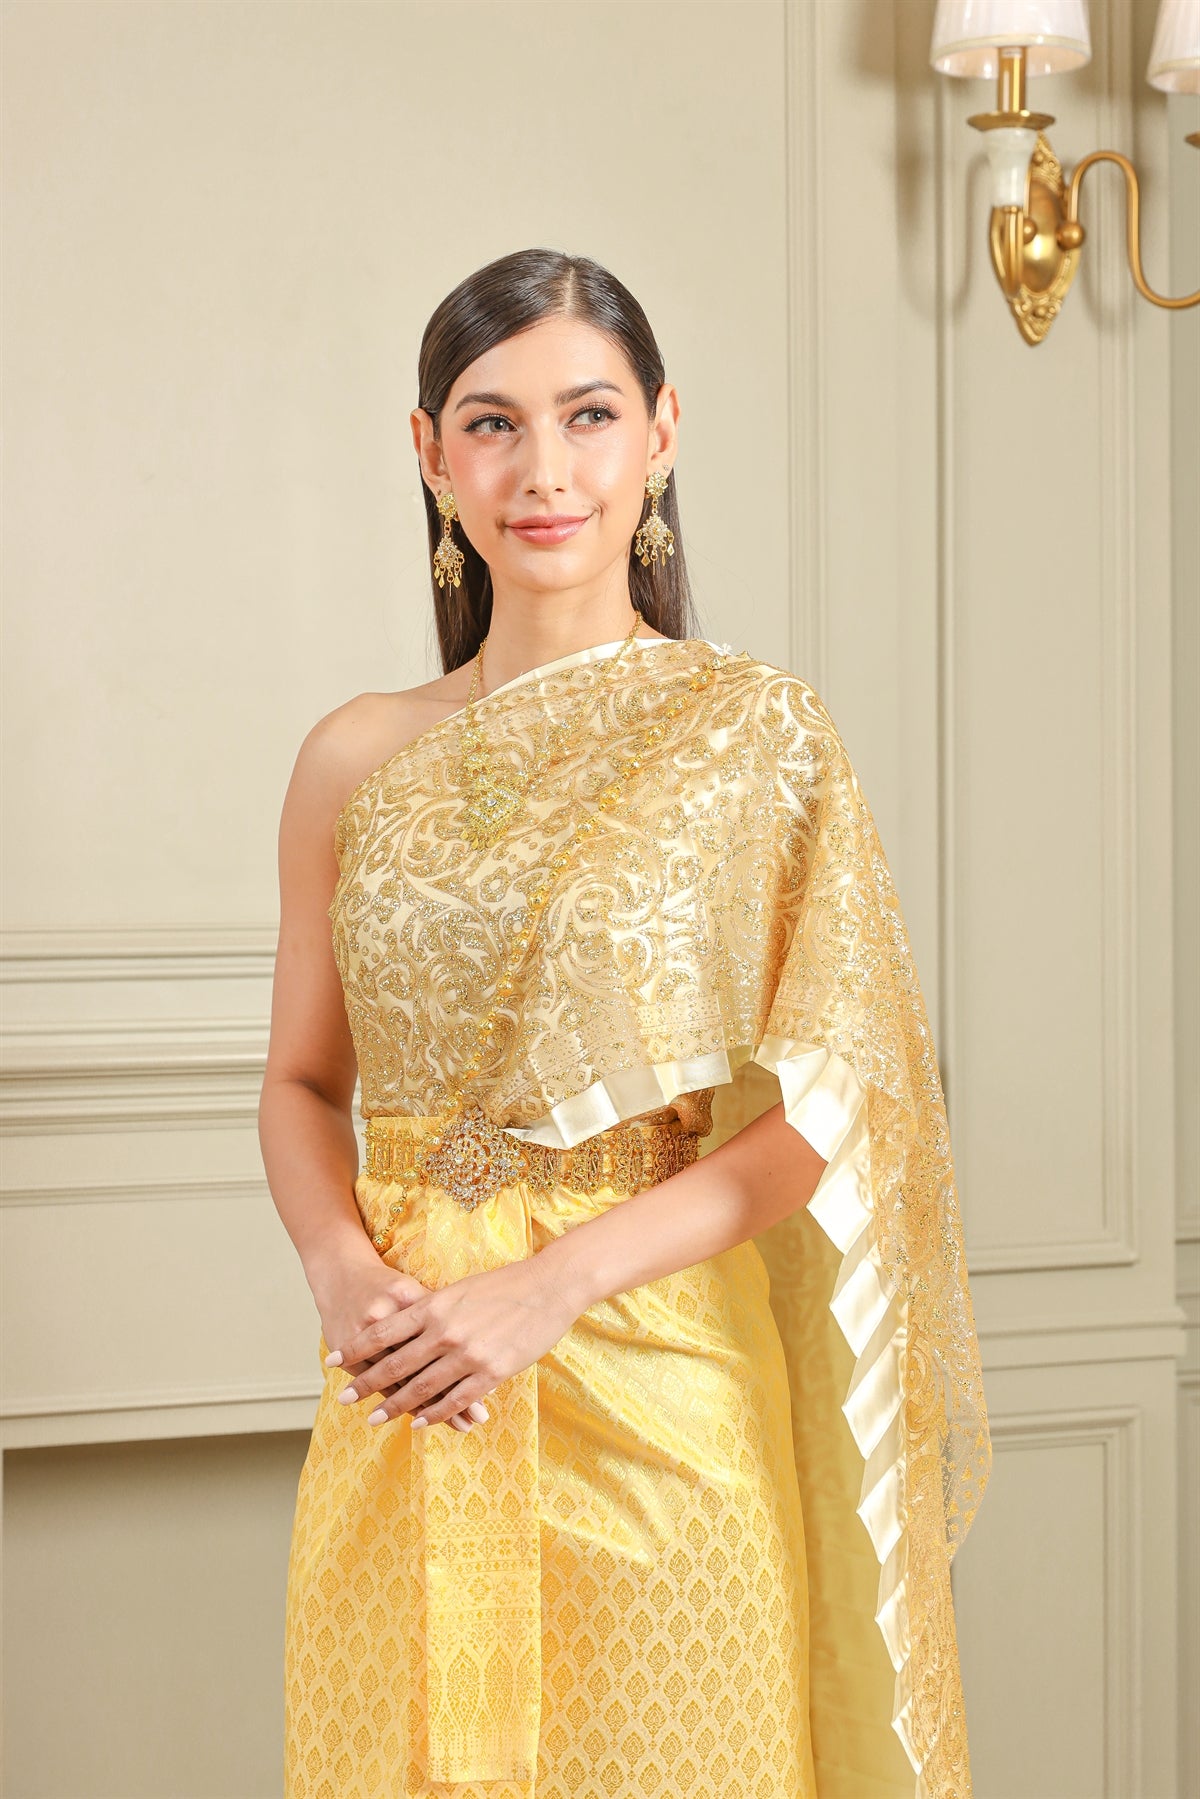 An elegant gold traditional Thai dress.